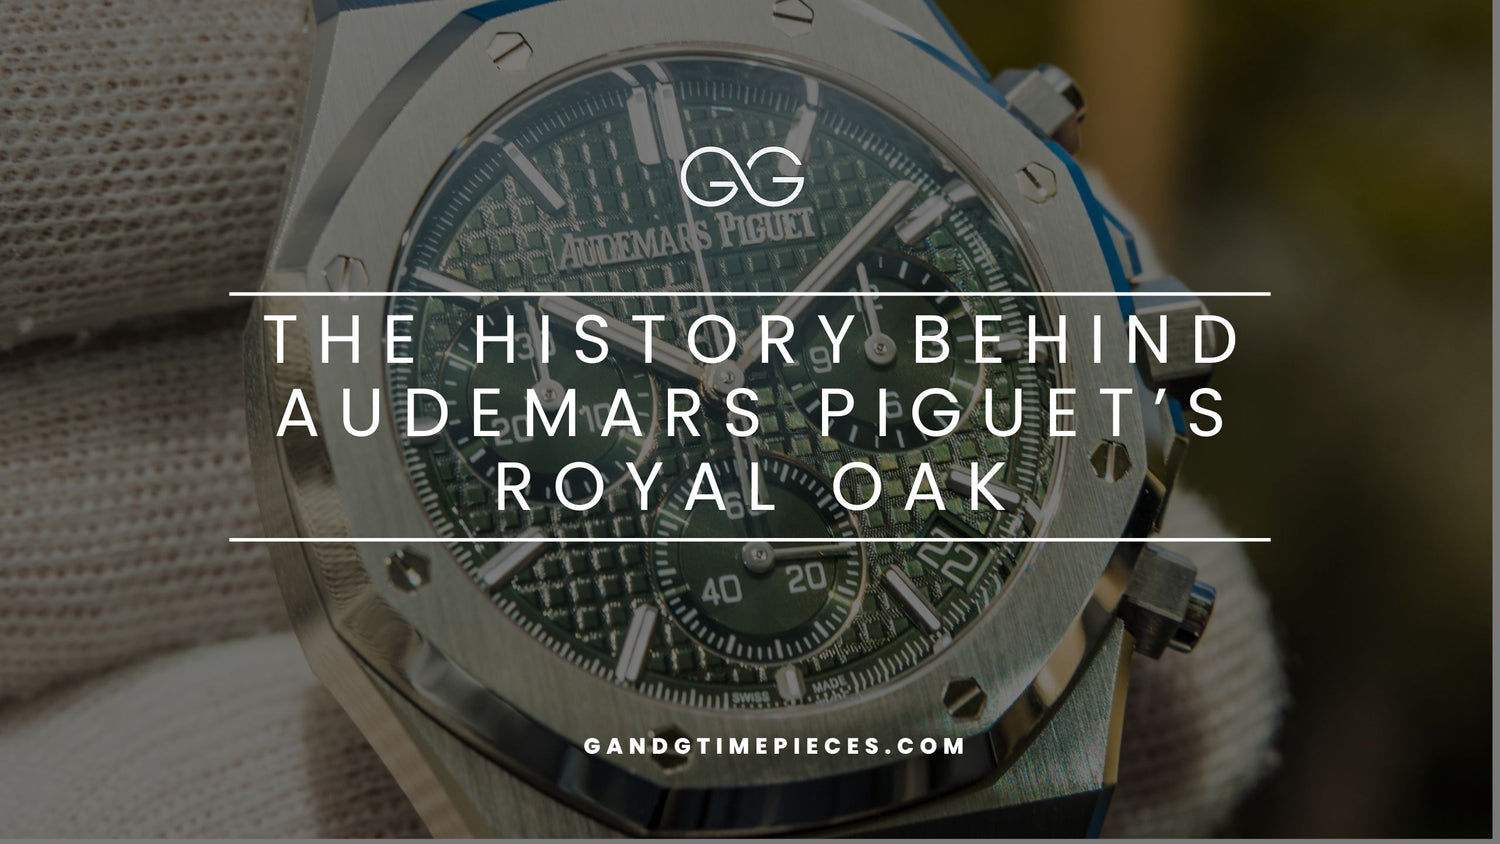 The History Behind Audemars Piguet’s Royal Oak